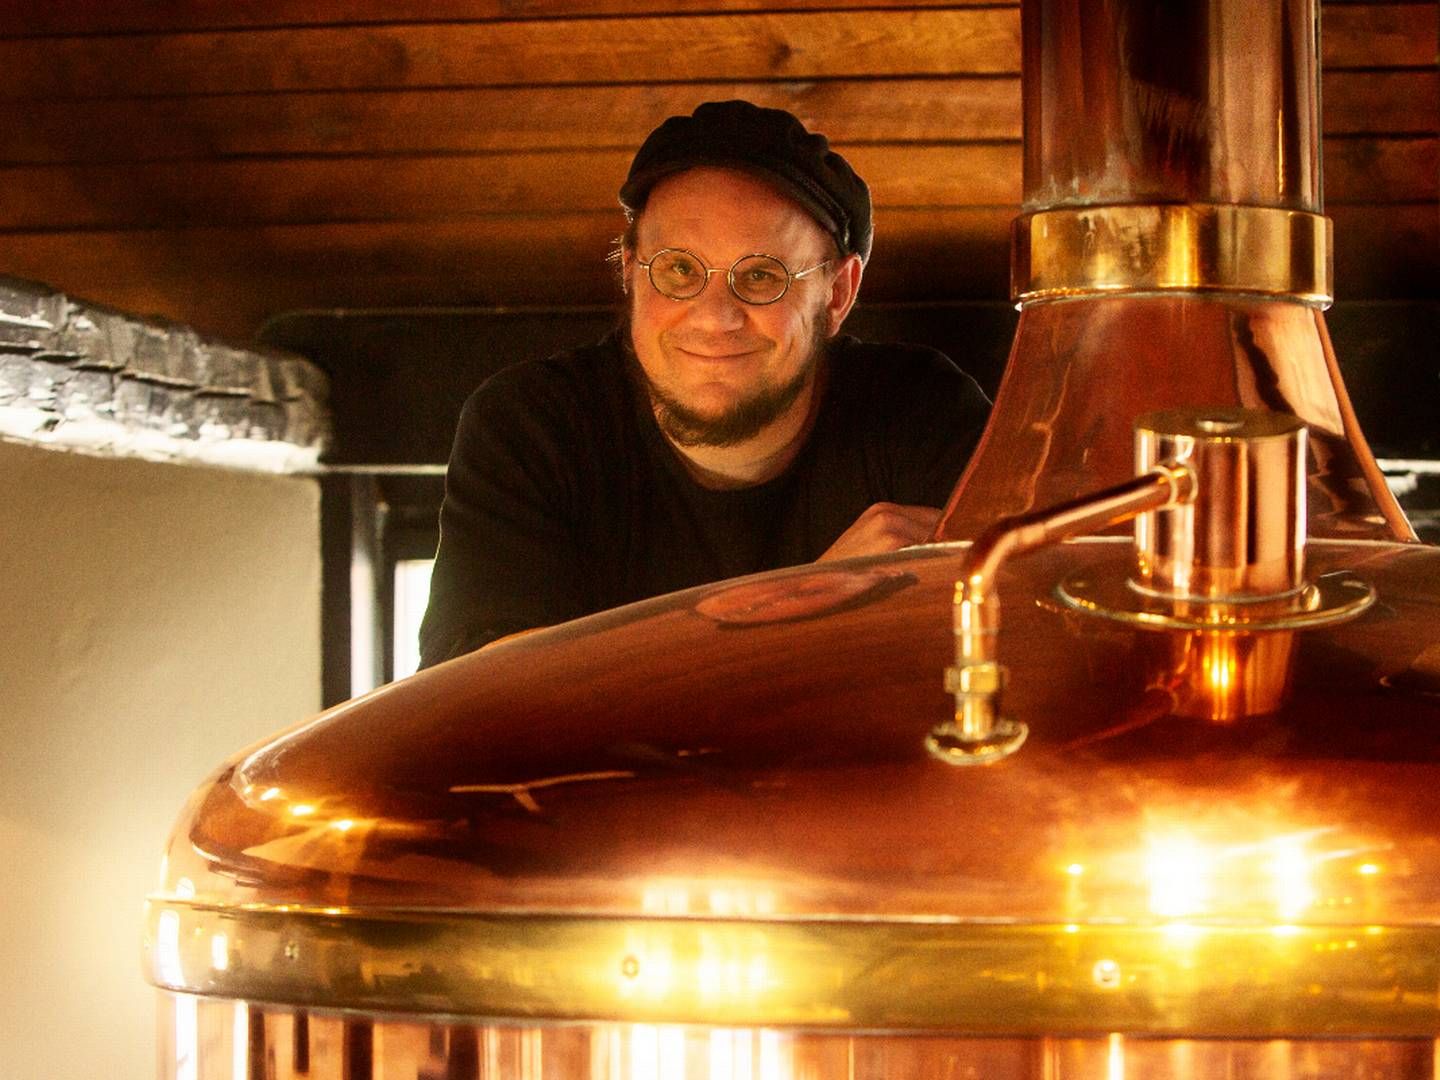 Jan Paul stopper til august efter 18 år som brygmester hos Svaneke Bryghus. | Photo: Kasper Buchardt, Pr/ Svaneke Bryghus